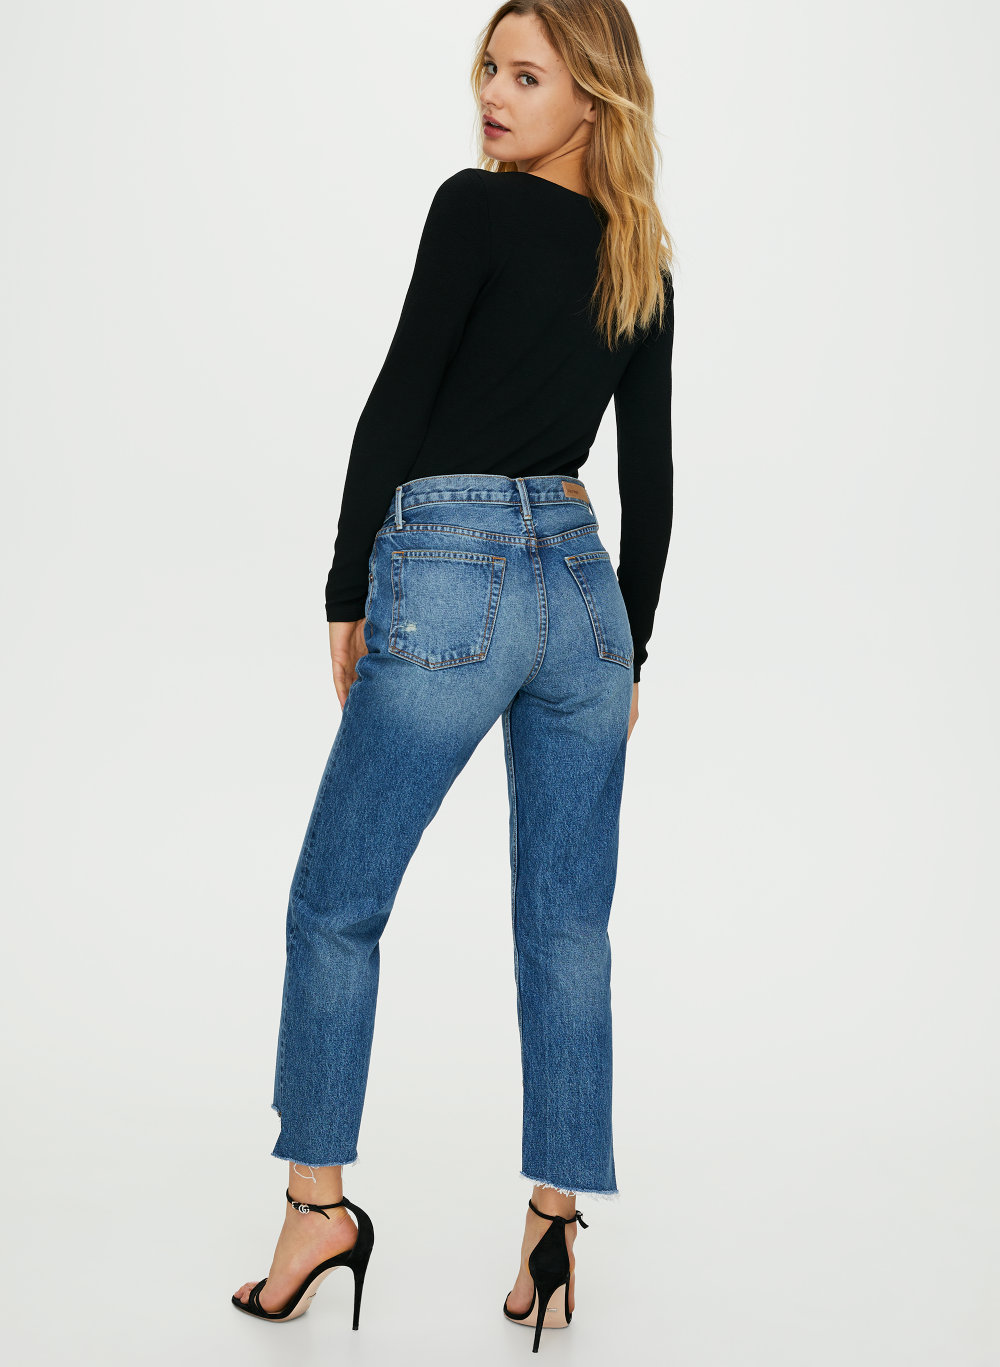 helena grlfrnd jeans